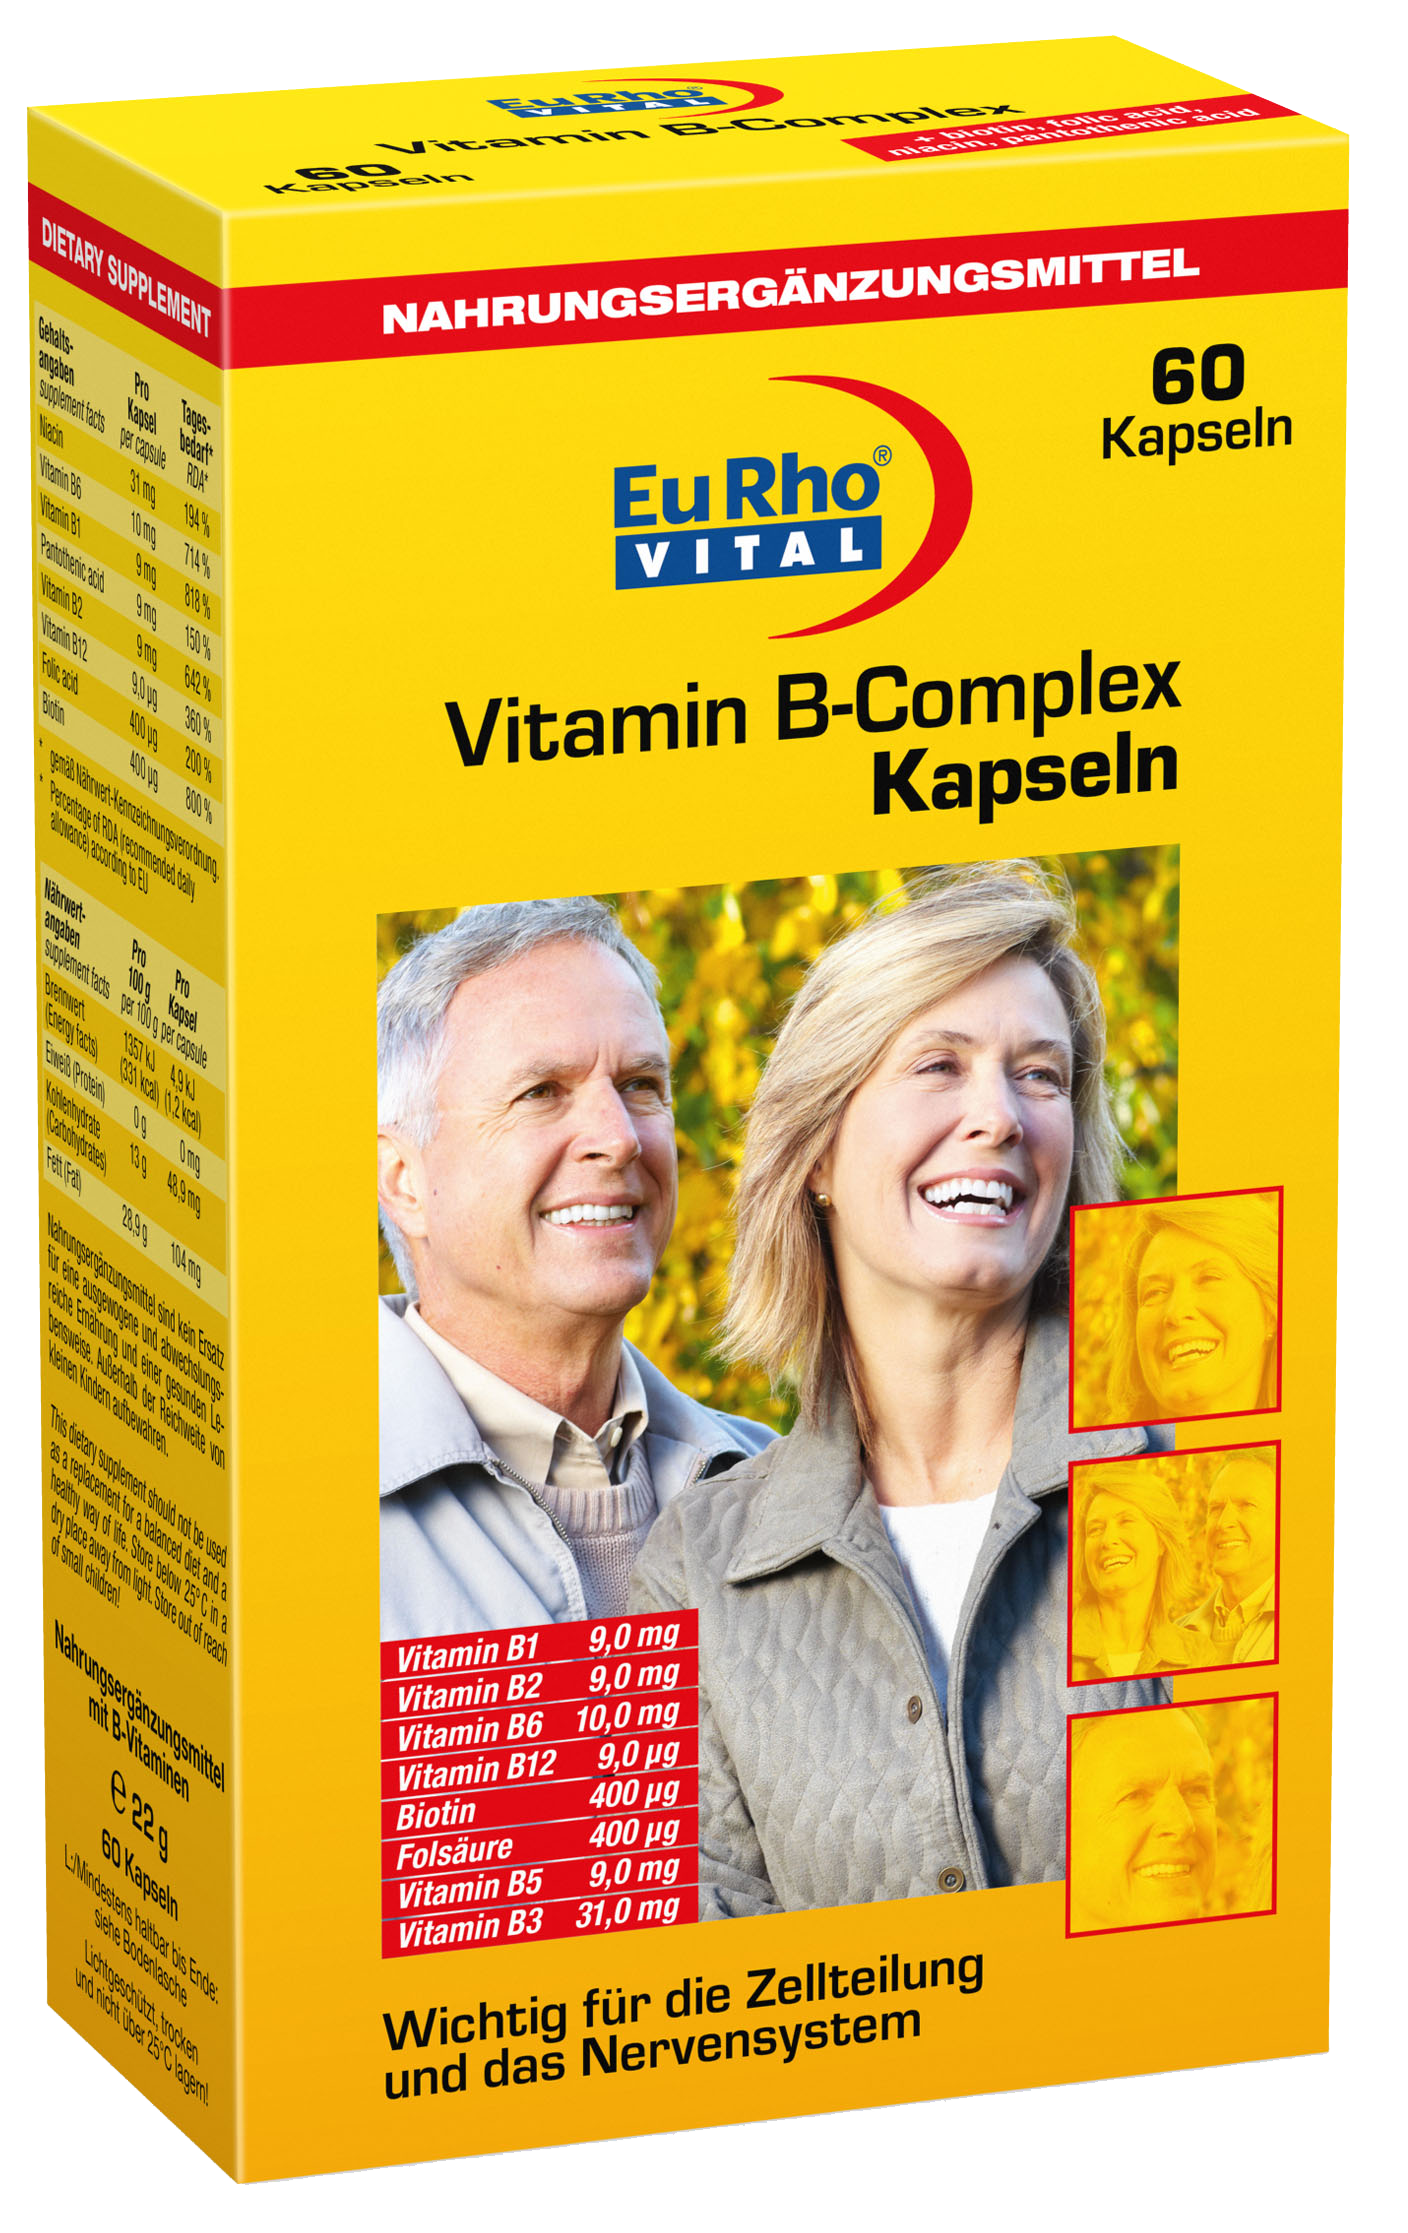 https://hakimanteb.com/wp-content/uploads/2014/04/Vitamin-B-Complex-Kapseln-png.png